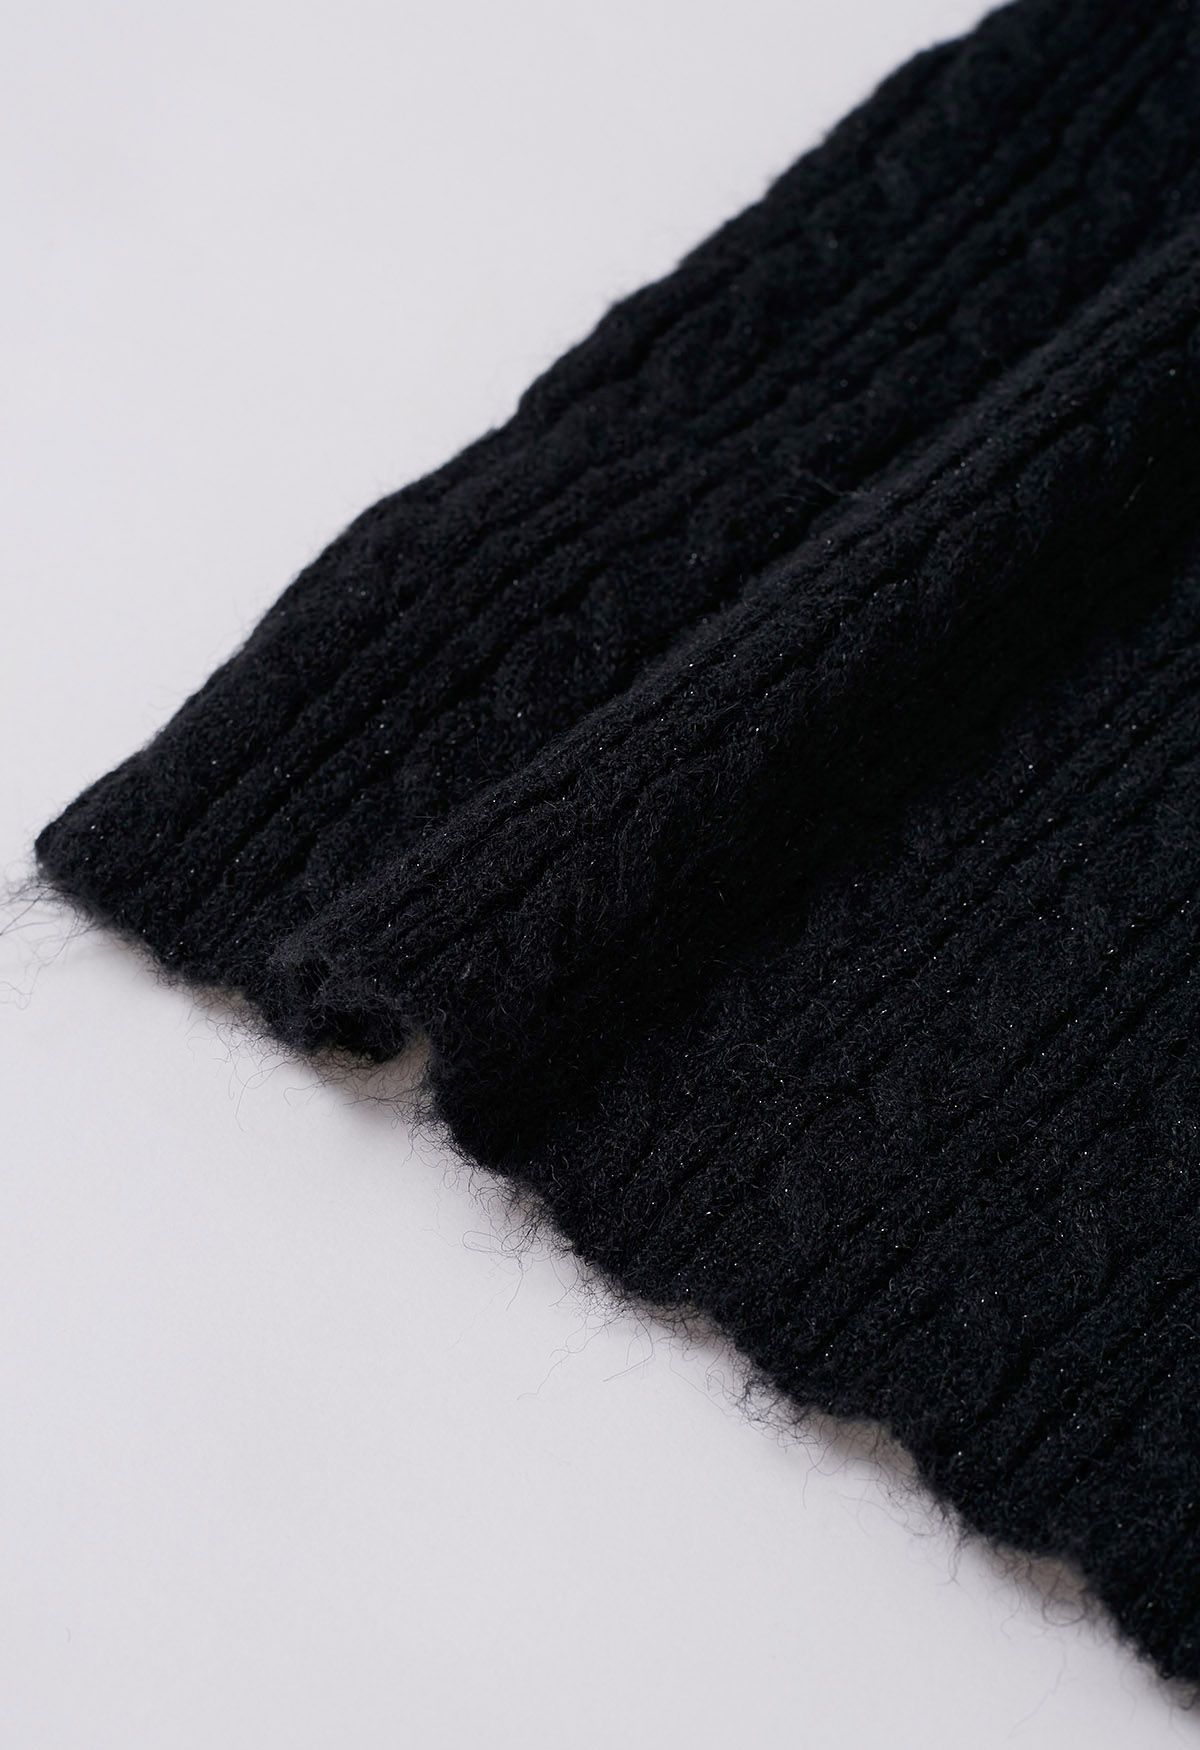 Folded Shoulder Cable Knit Top in Black